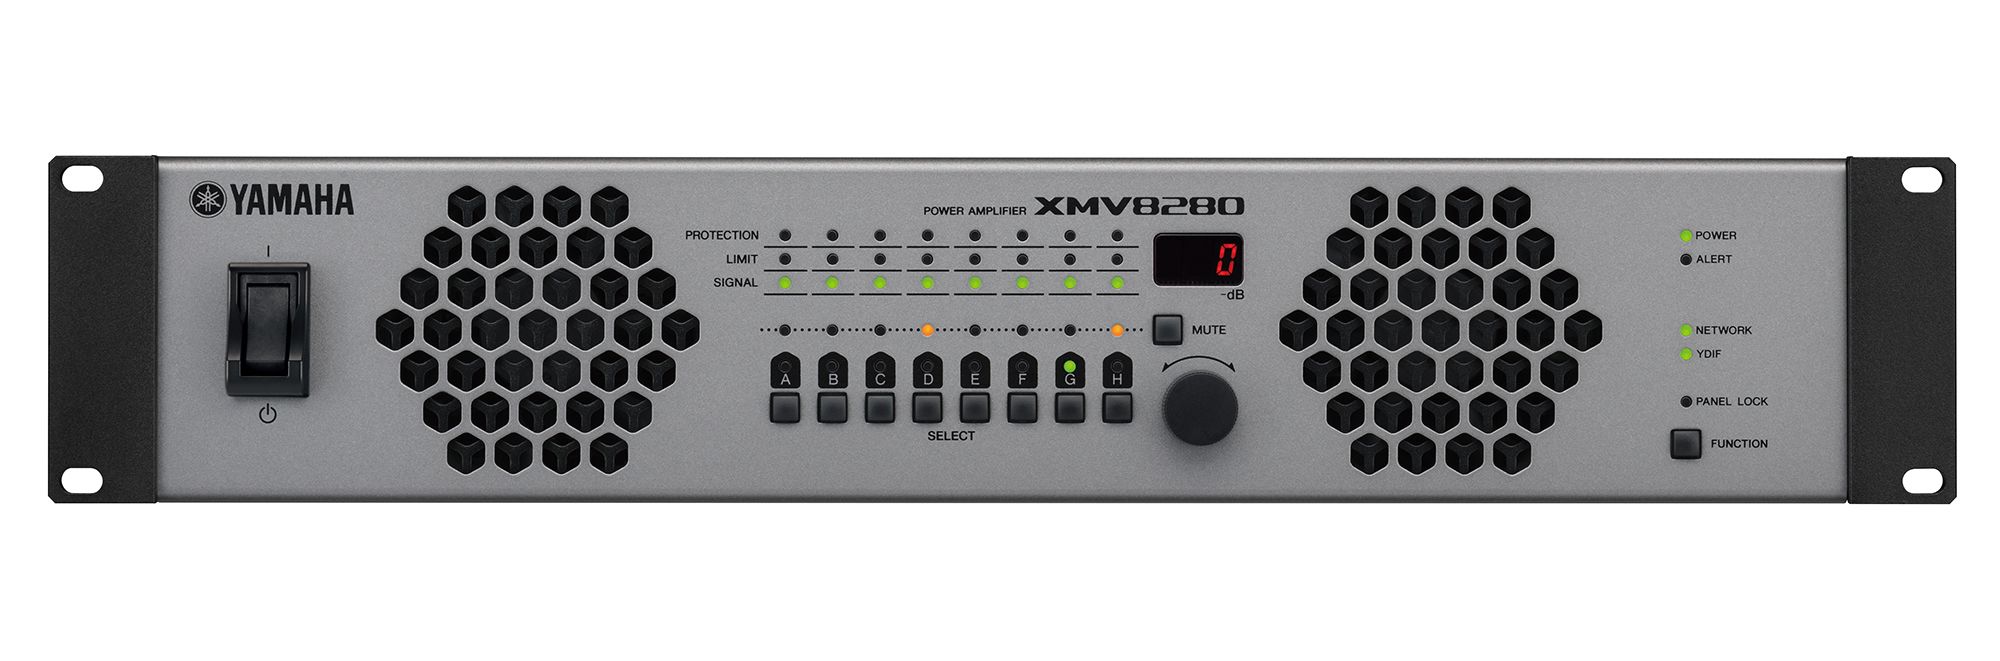 Yamaha XMV8280 Power Amplifier